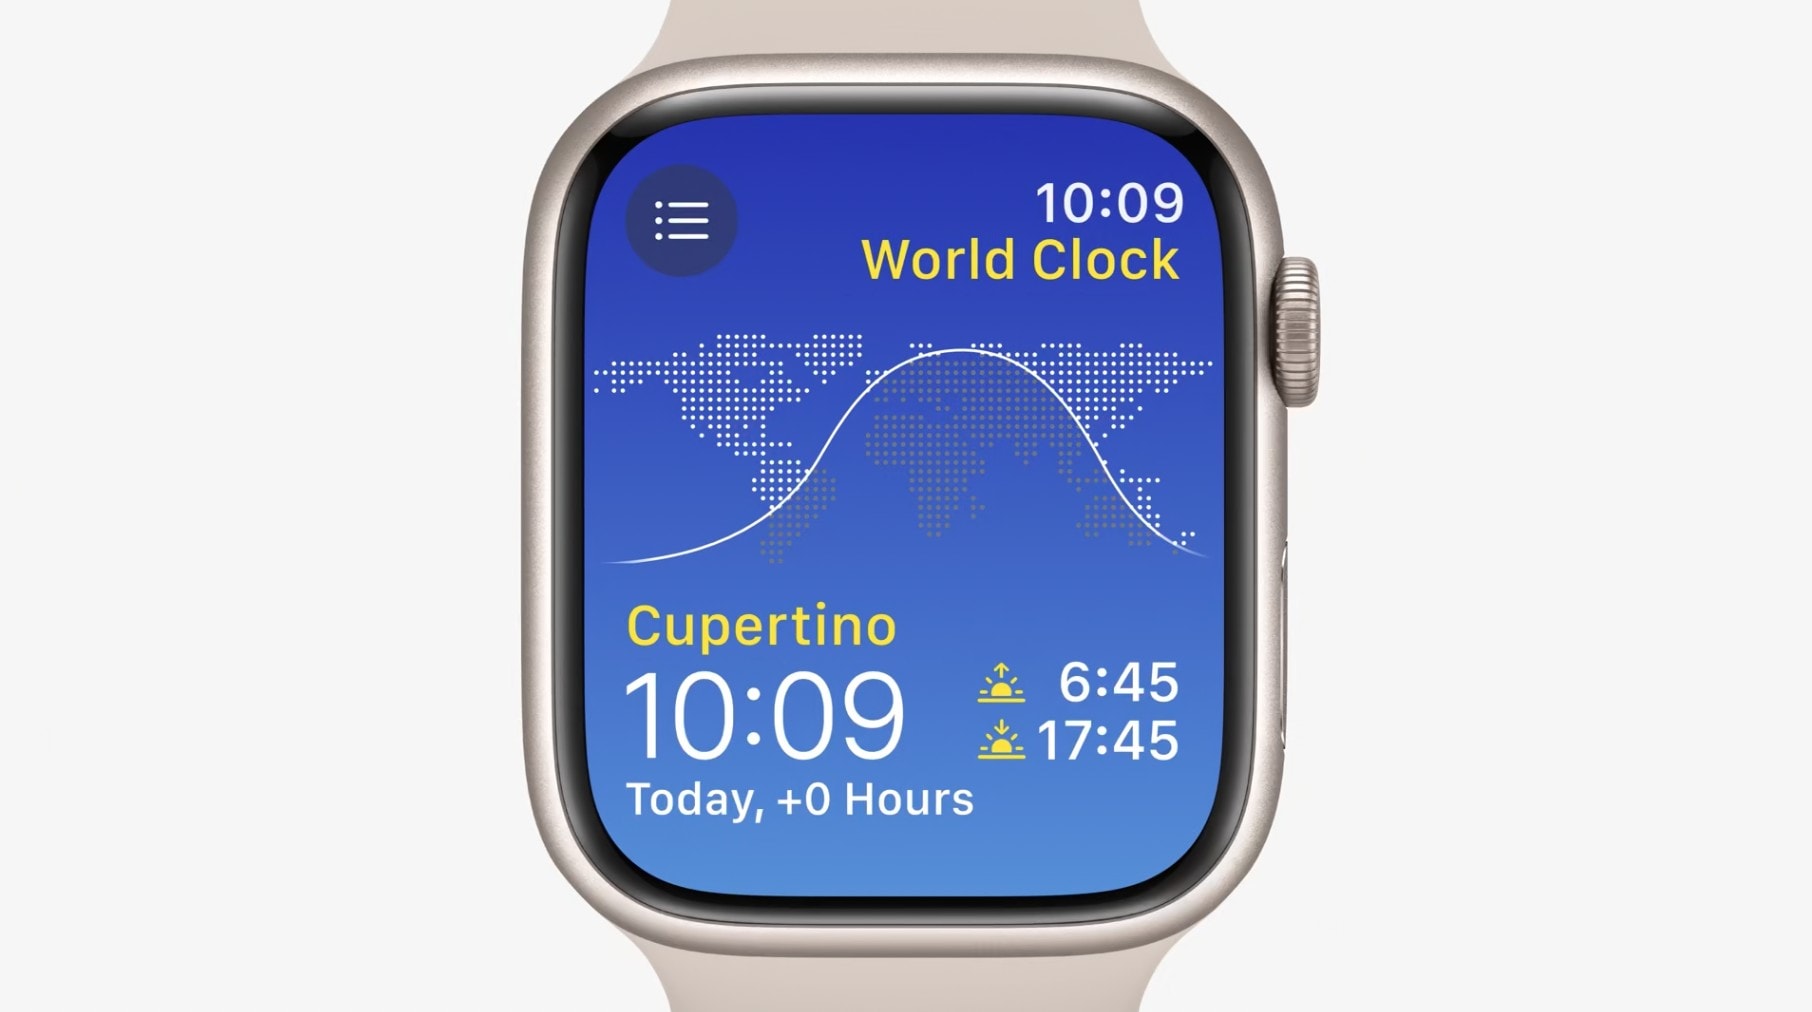 World Clock app looking lovely on watchOS 10